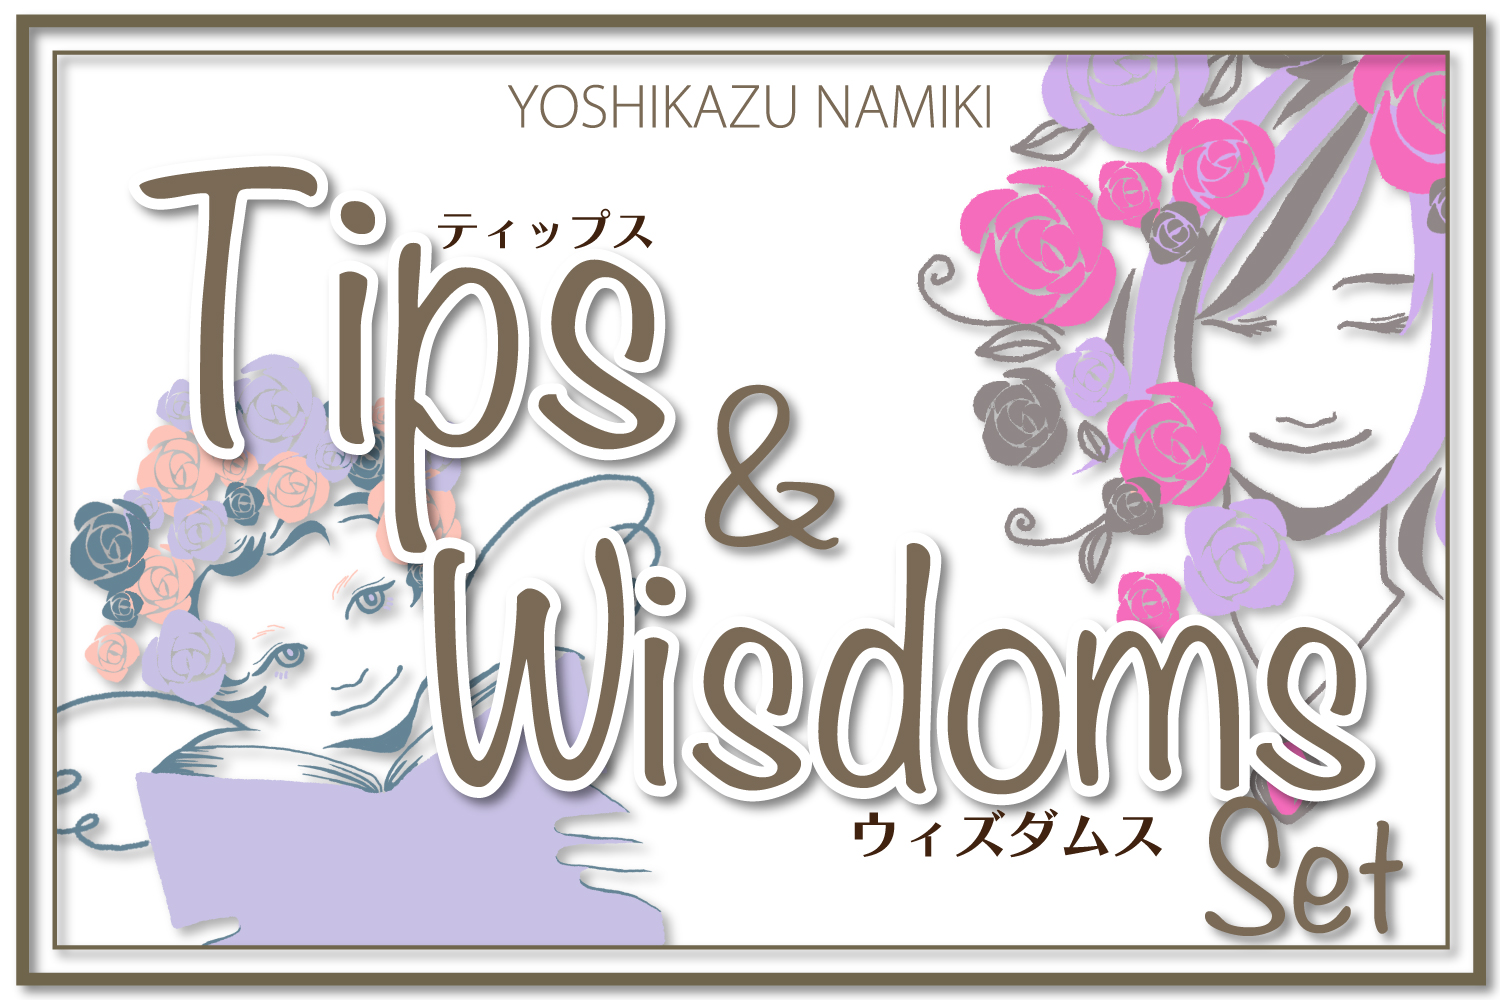 202402 Tips Wisdoms